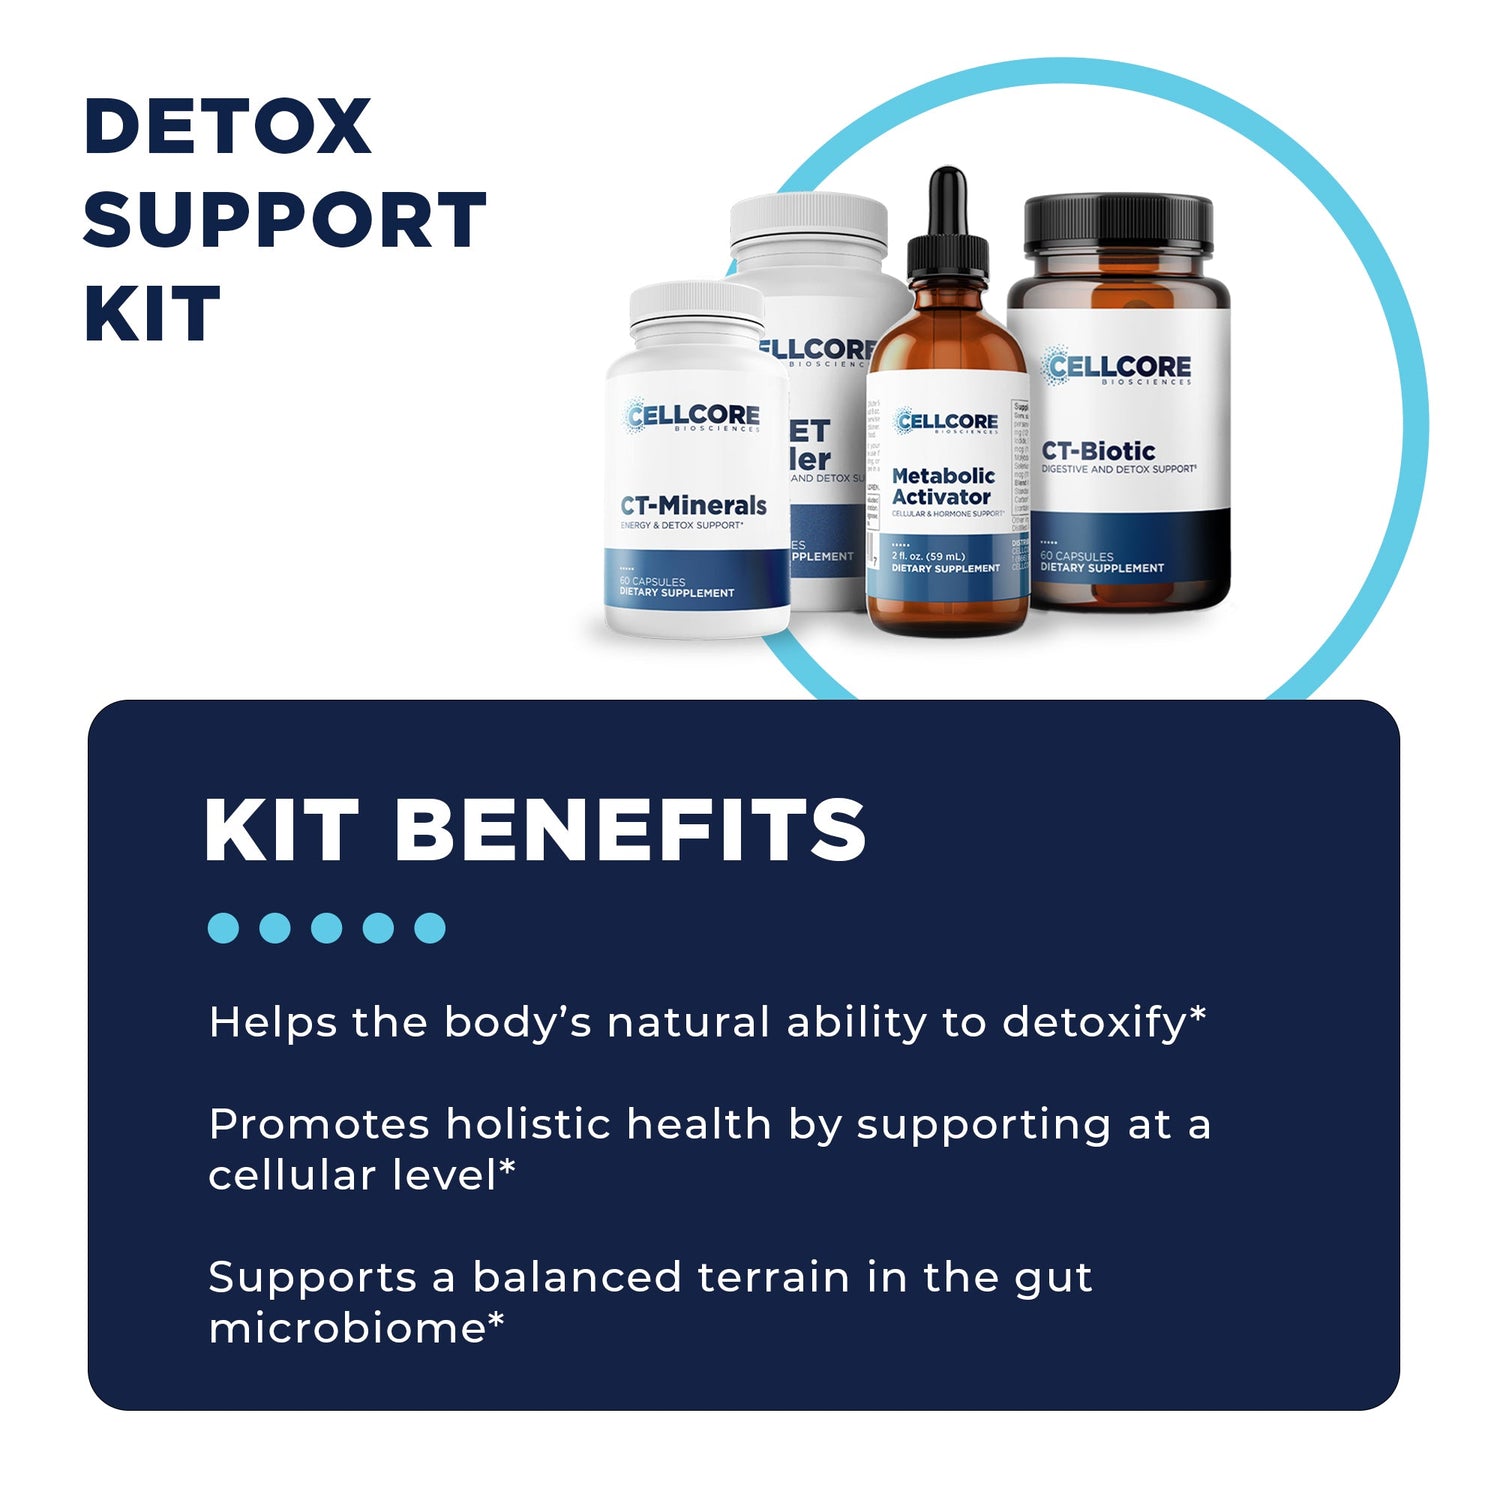 Detox Support Kit Benefits